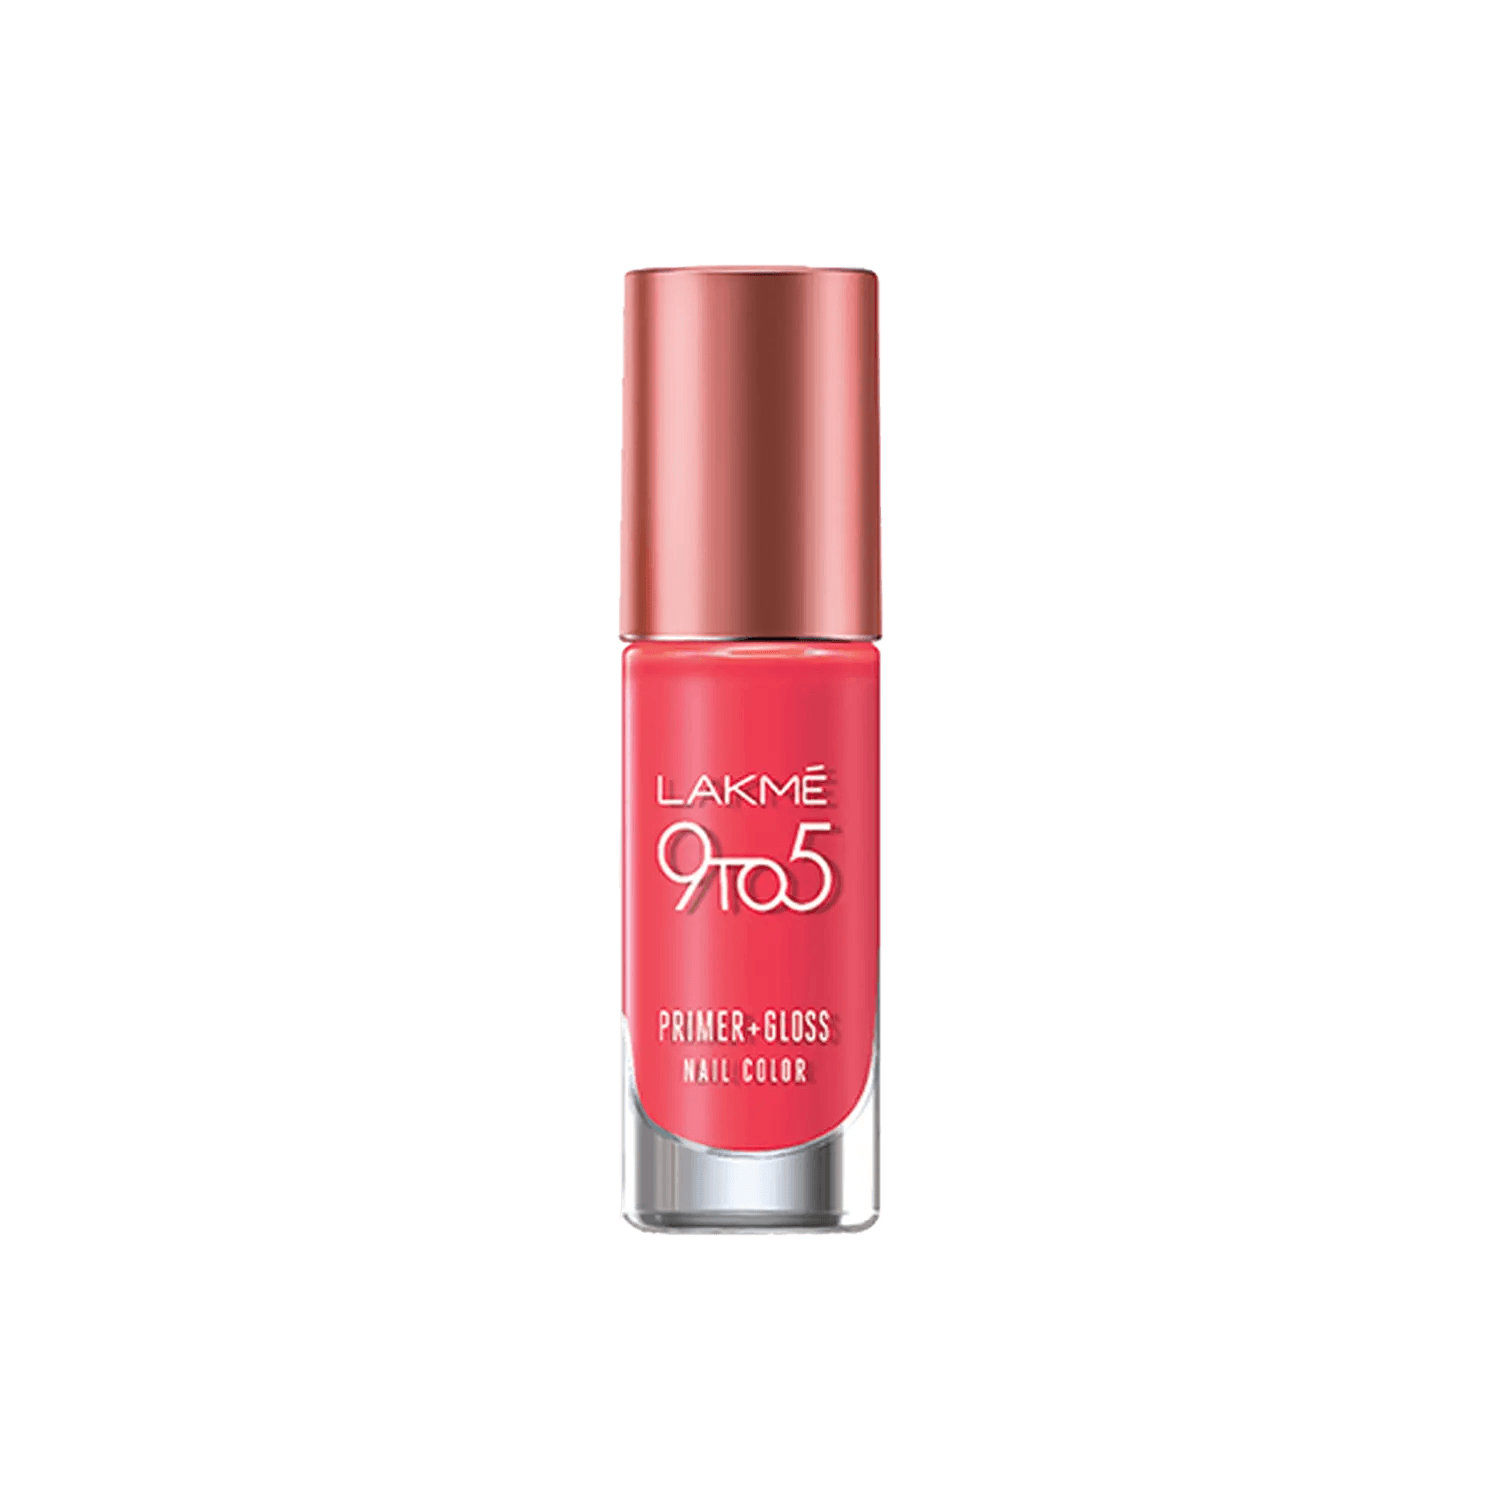 Lakme | Lakme 9To5 Primer + Gloss Nail Color - Blush Punch (6ml)